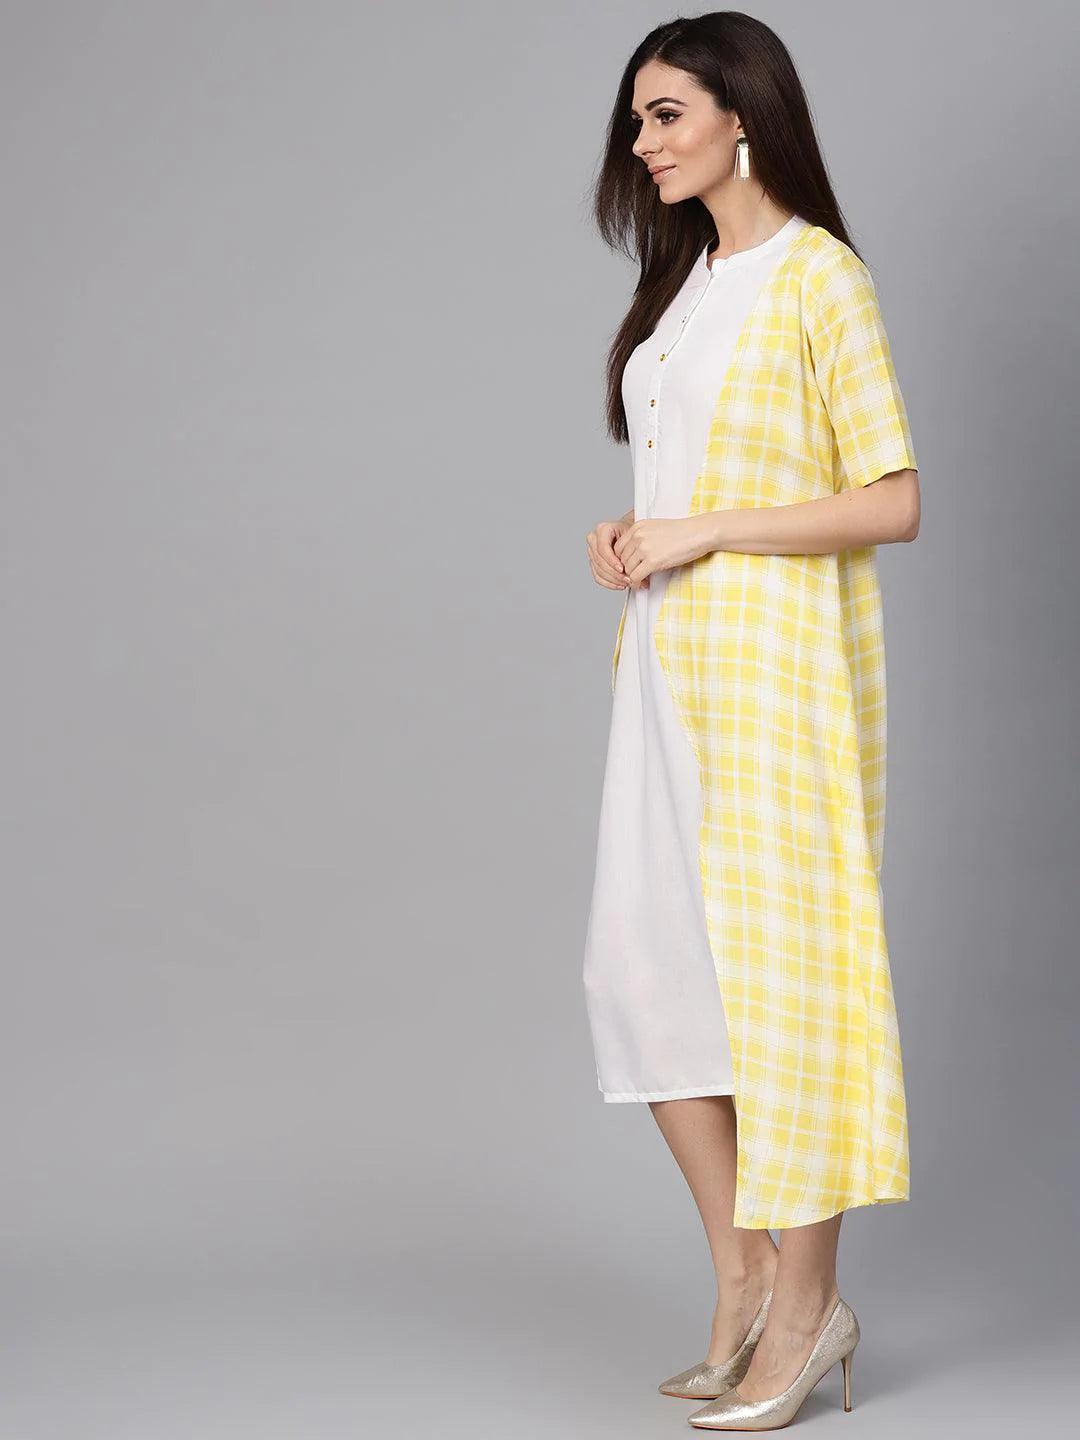 Yellow Checkered Rayon Dress With Jacket - ShopLibas